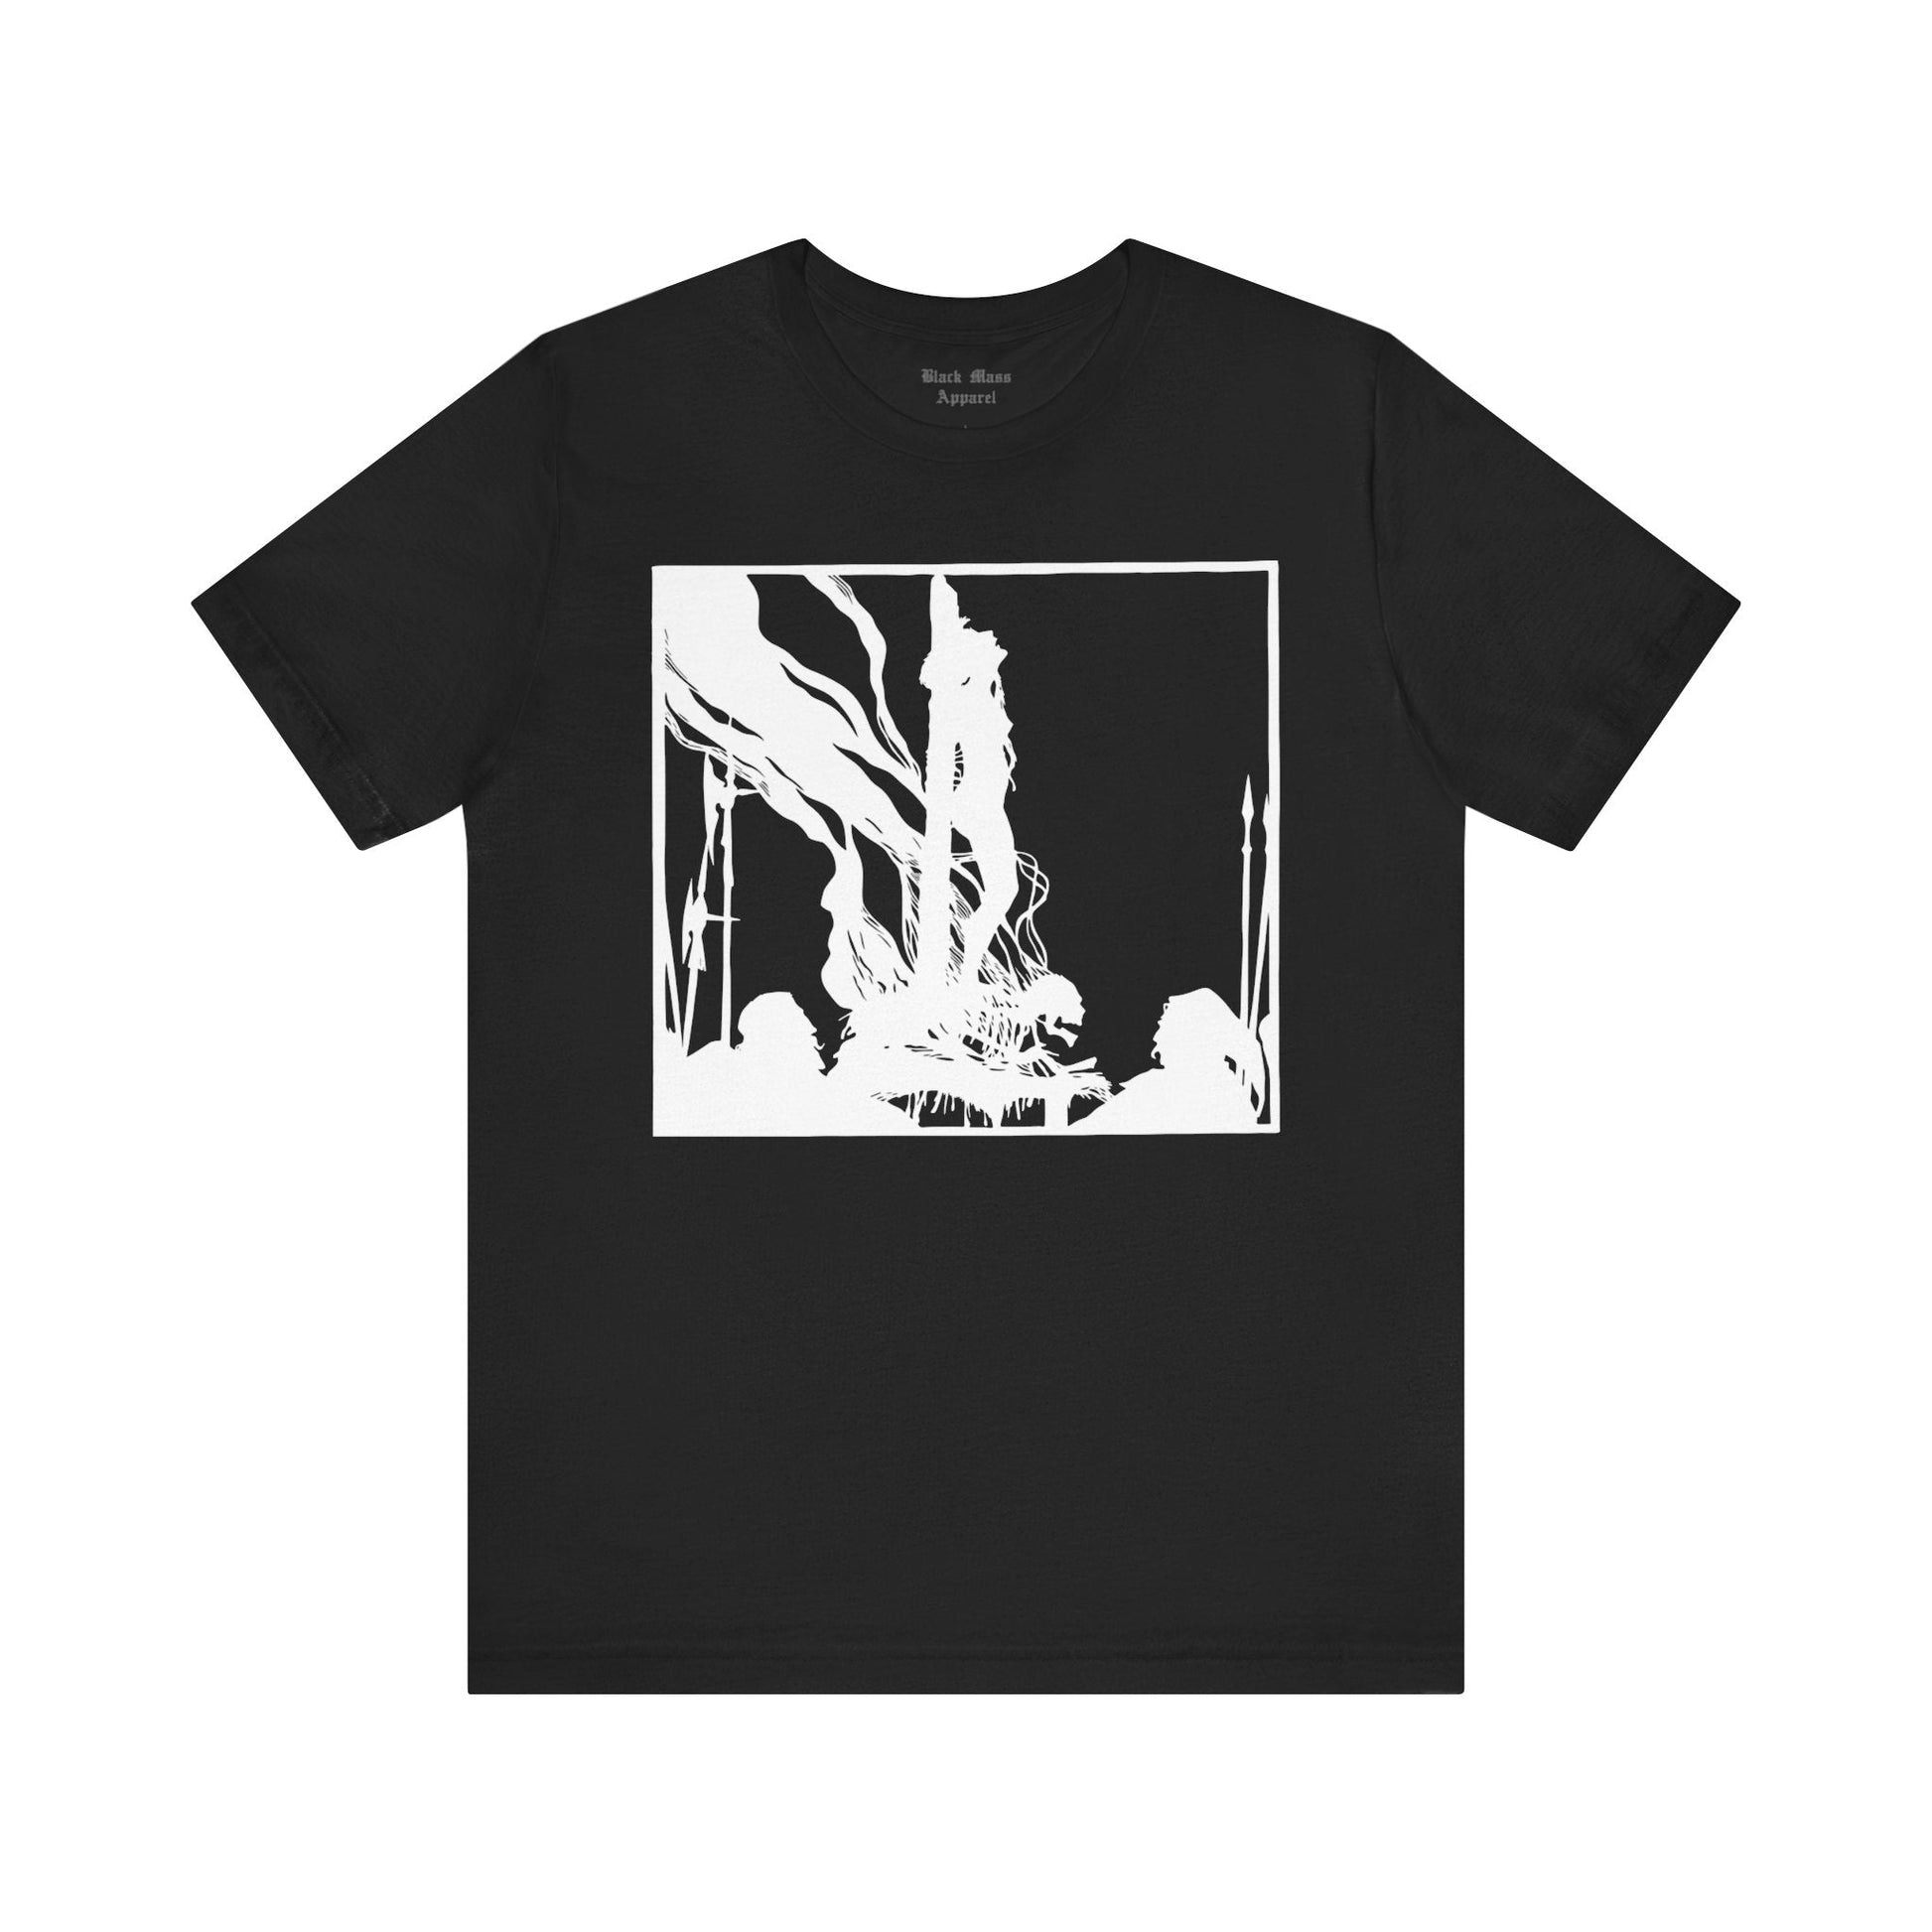 Death in the Fire - Black Mass Apparel - T-Shirt